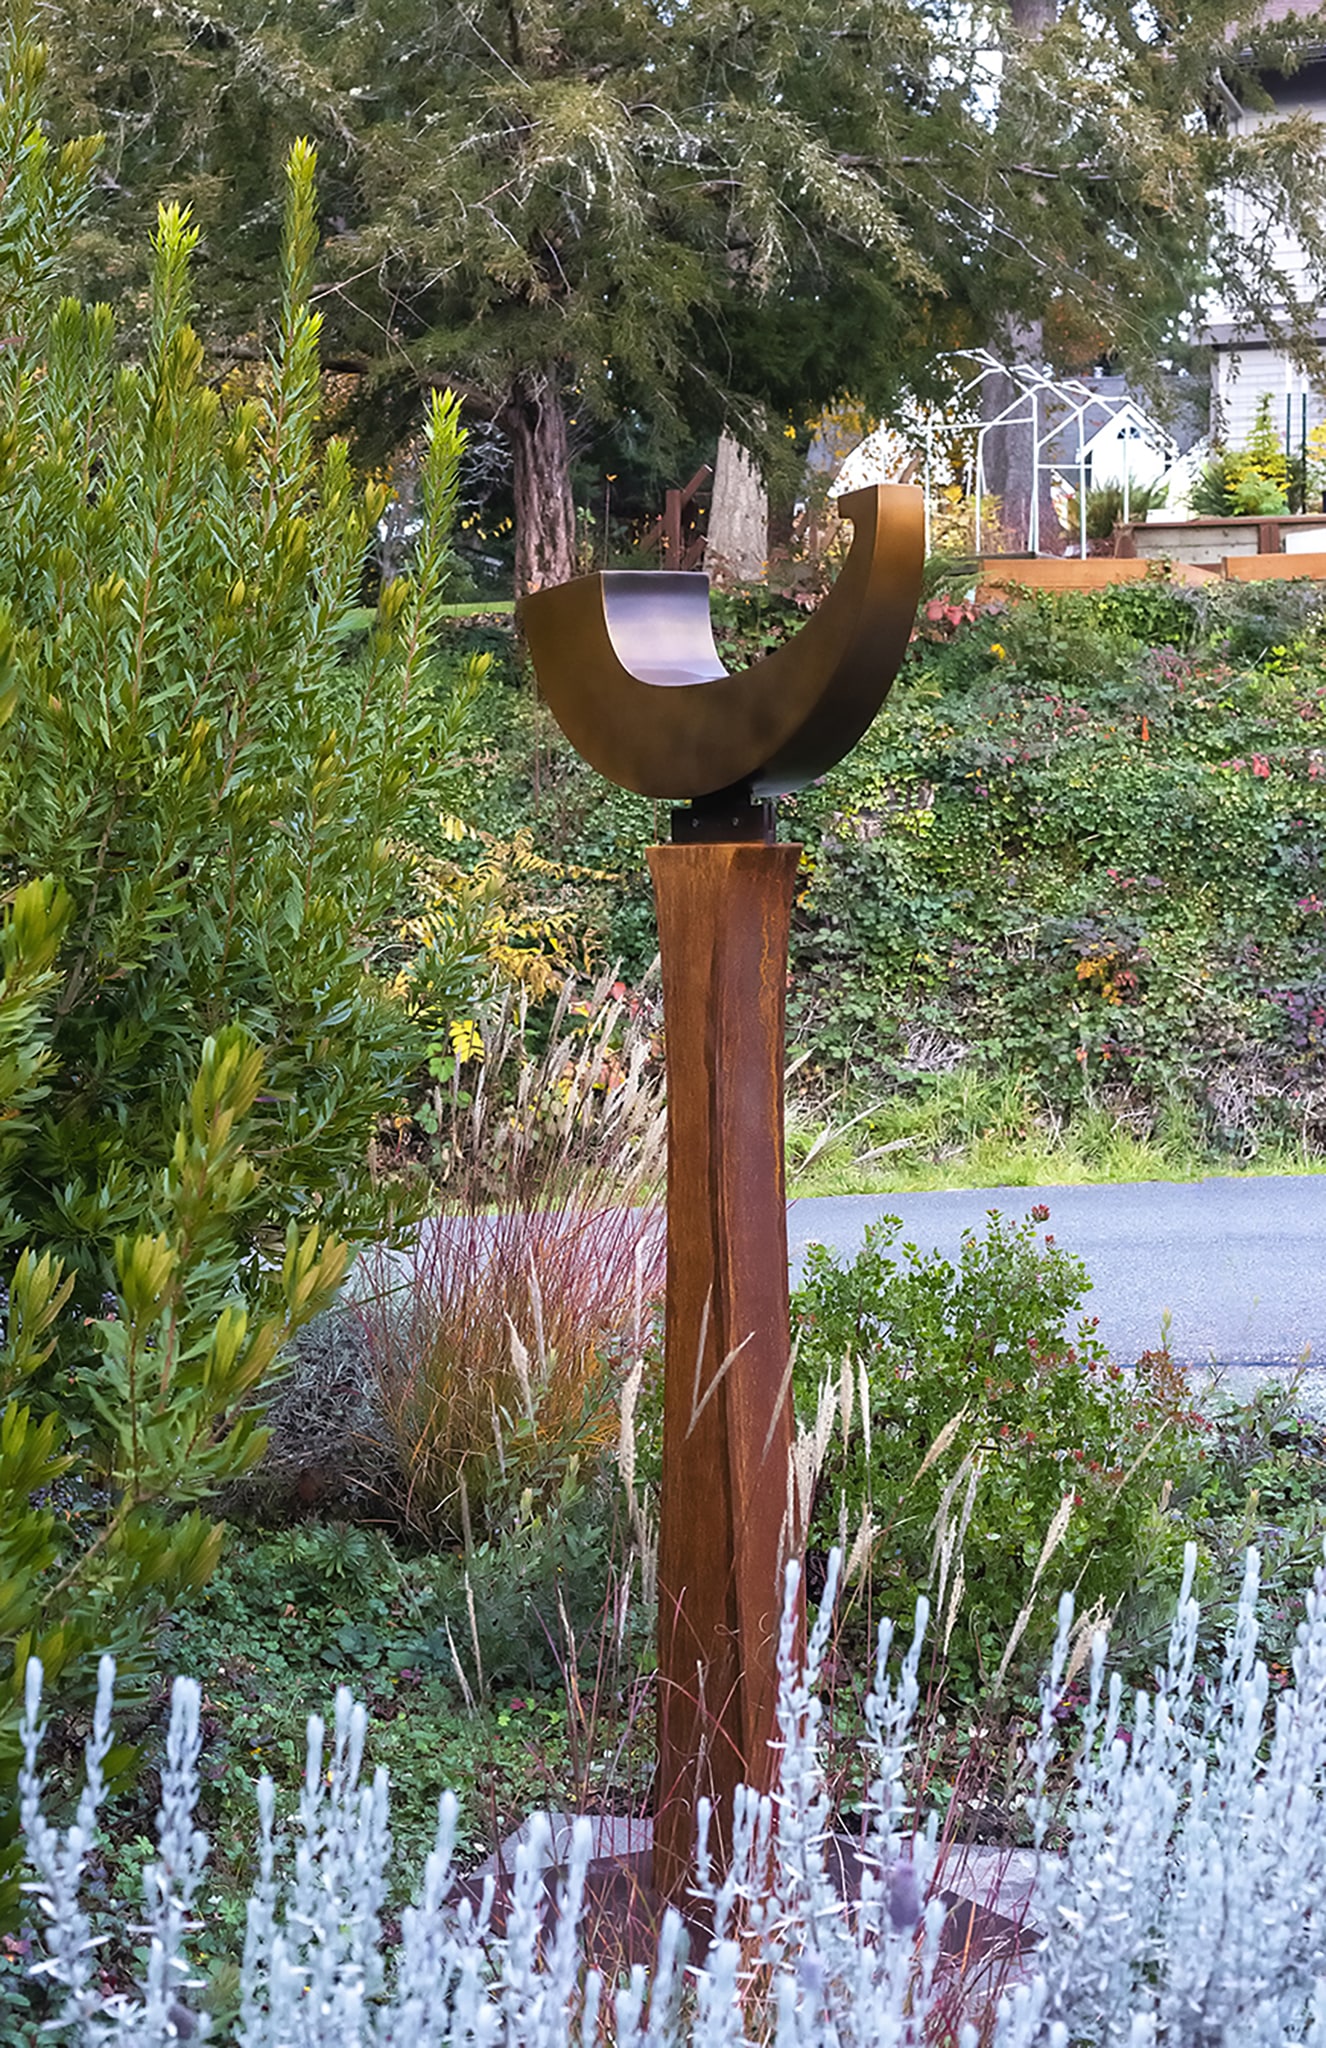 Nordic Arc, 5' 7" x 2' 9" x 1', bronze on Corten steel base, Sutter Cathedral Hills Hospital, San Francisco, CA